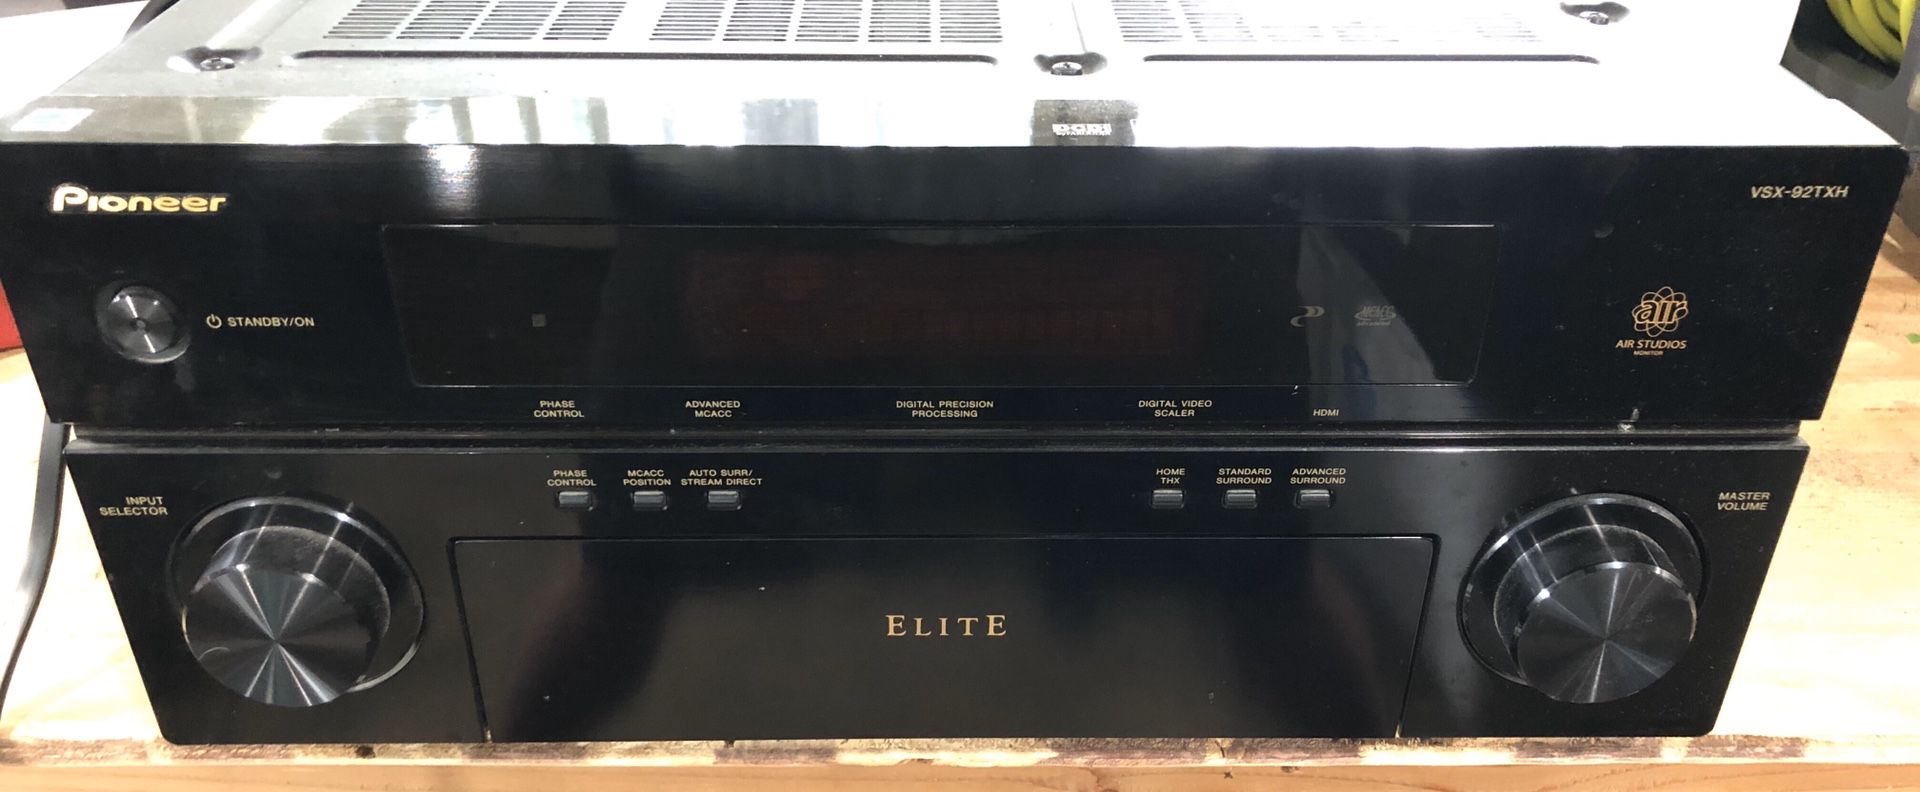 Pioneer Elite 7.1 Receiver VSX-92txh